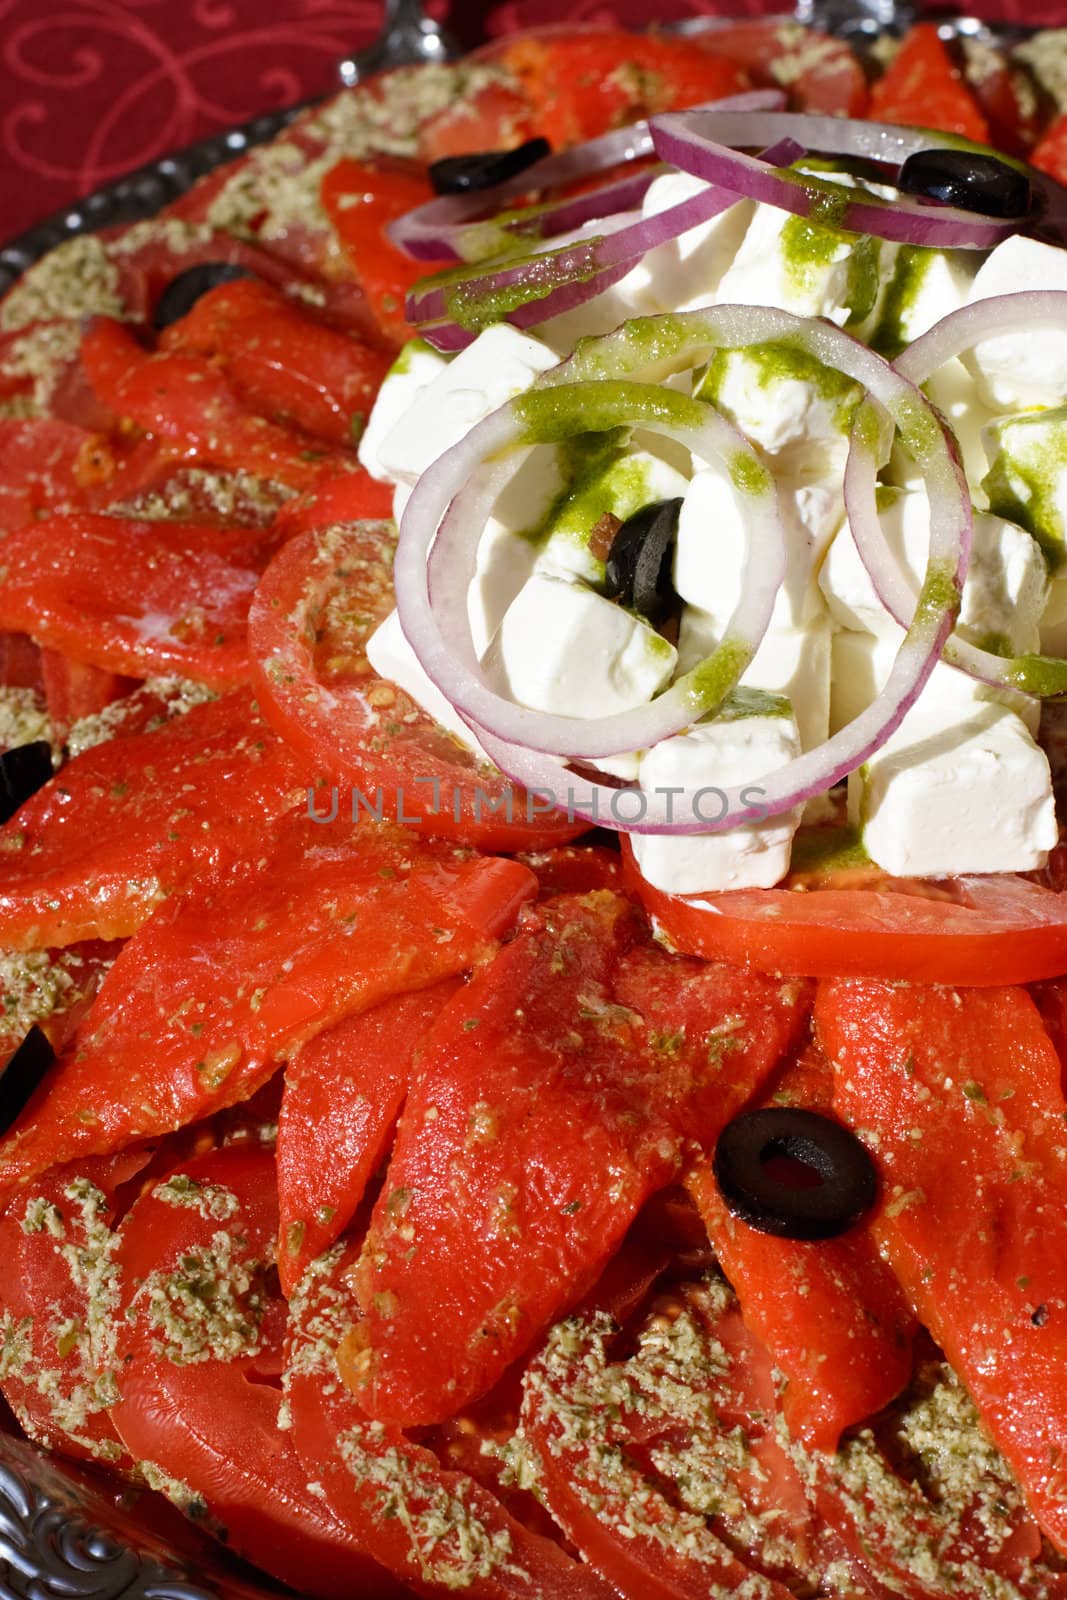 Variation of Greek salad with roasted pepper